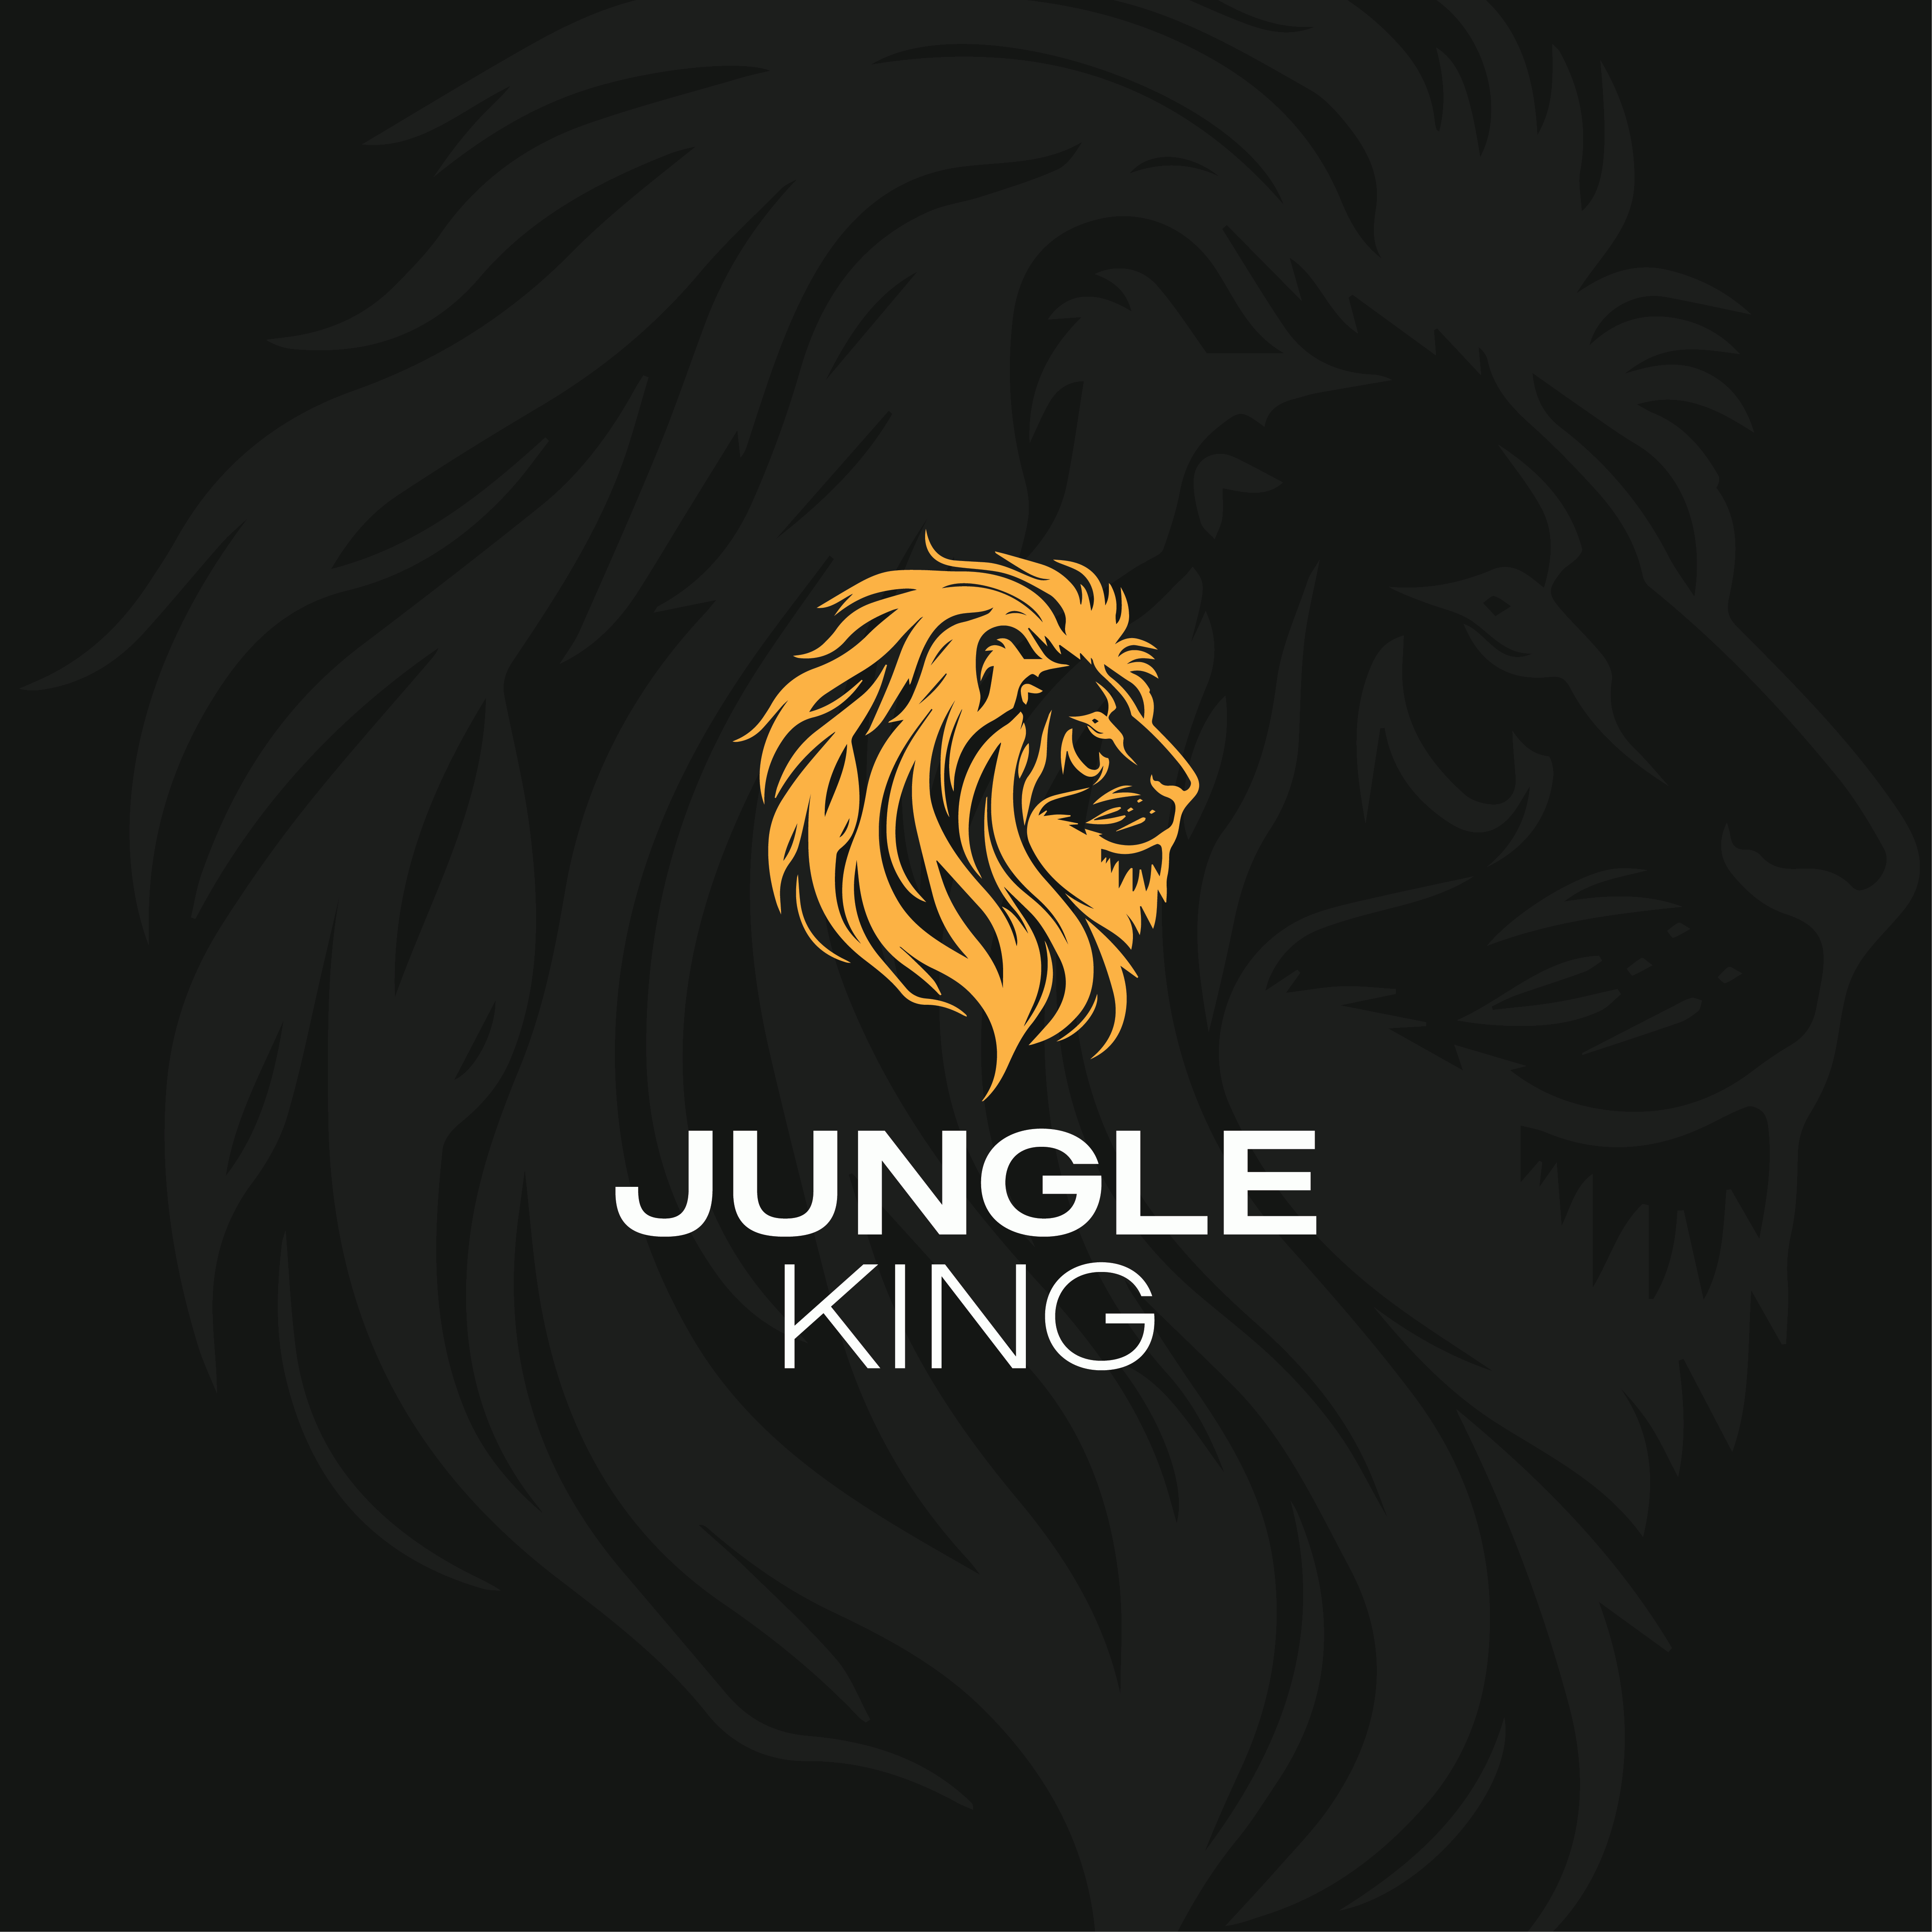 LION LOGO - JUNGLE KING cover image.